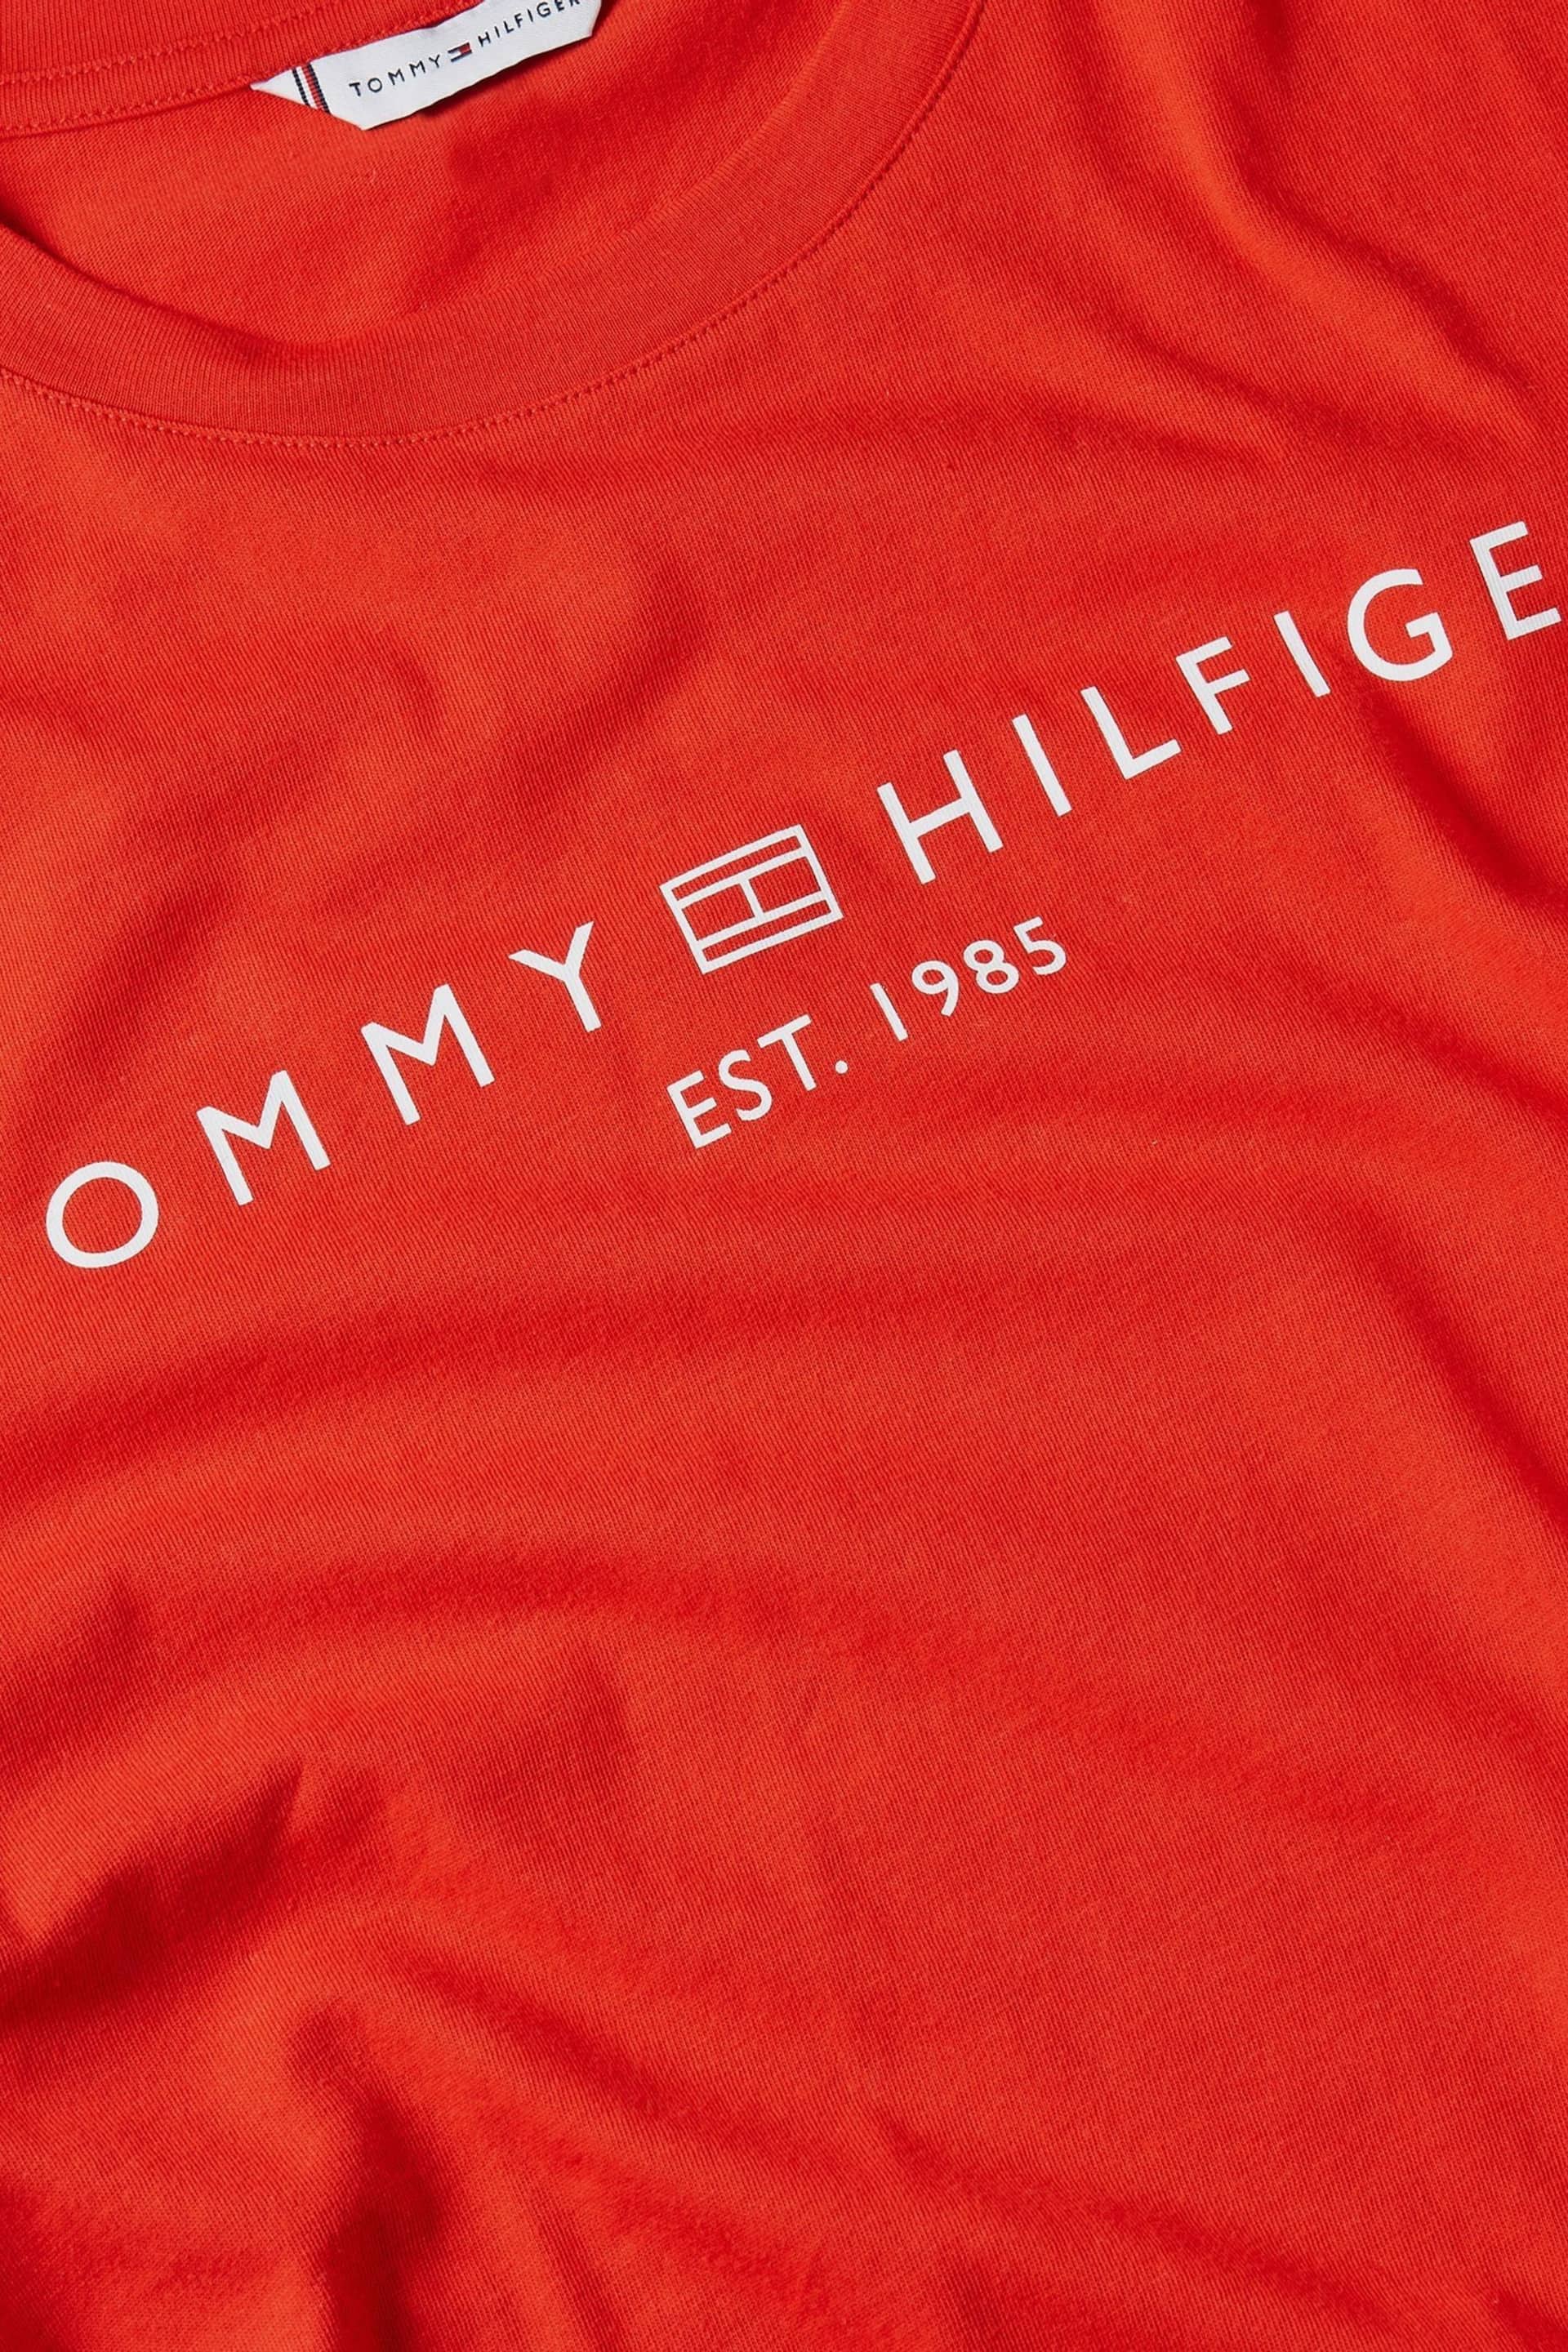 Tommy Hilfiger Red Logo T-Shirt - Image 6 of 6